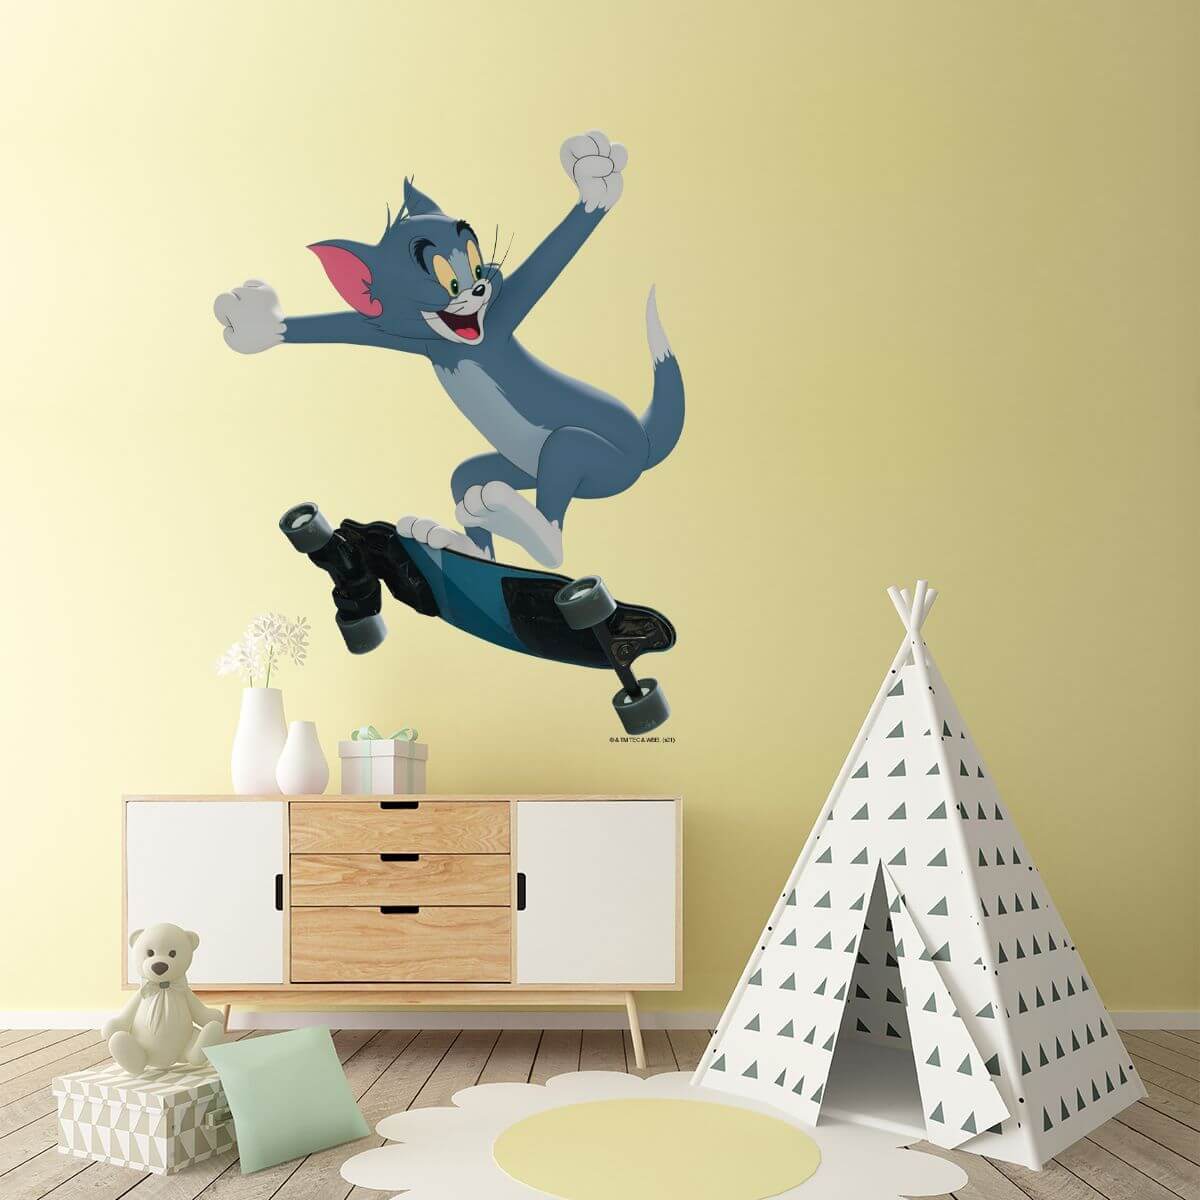 Kismet Decals Tom & Jerry: Tom on His Skateboard Licensed Wall Sticker - Easy DIY Home & Room Decor Cartoon Wall Art - Kismet Decals